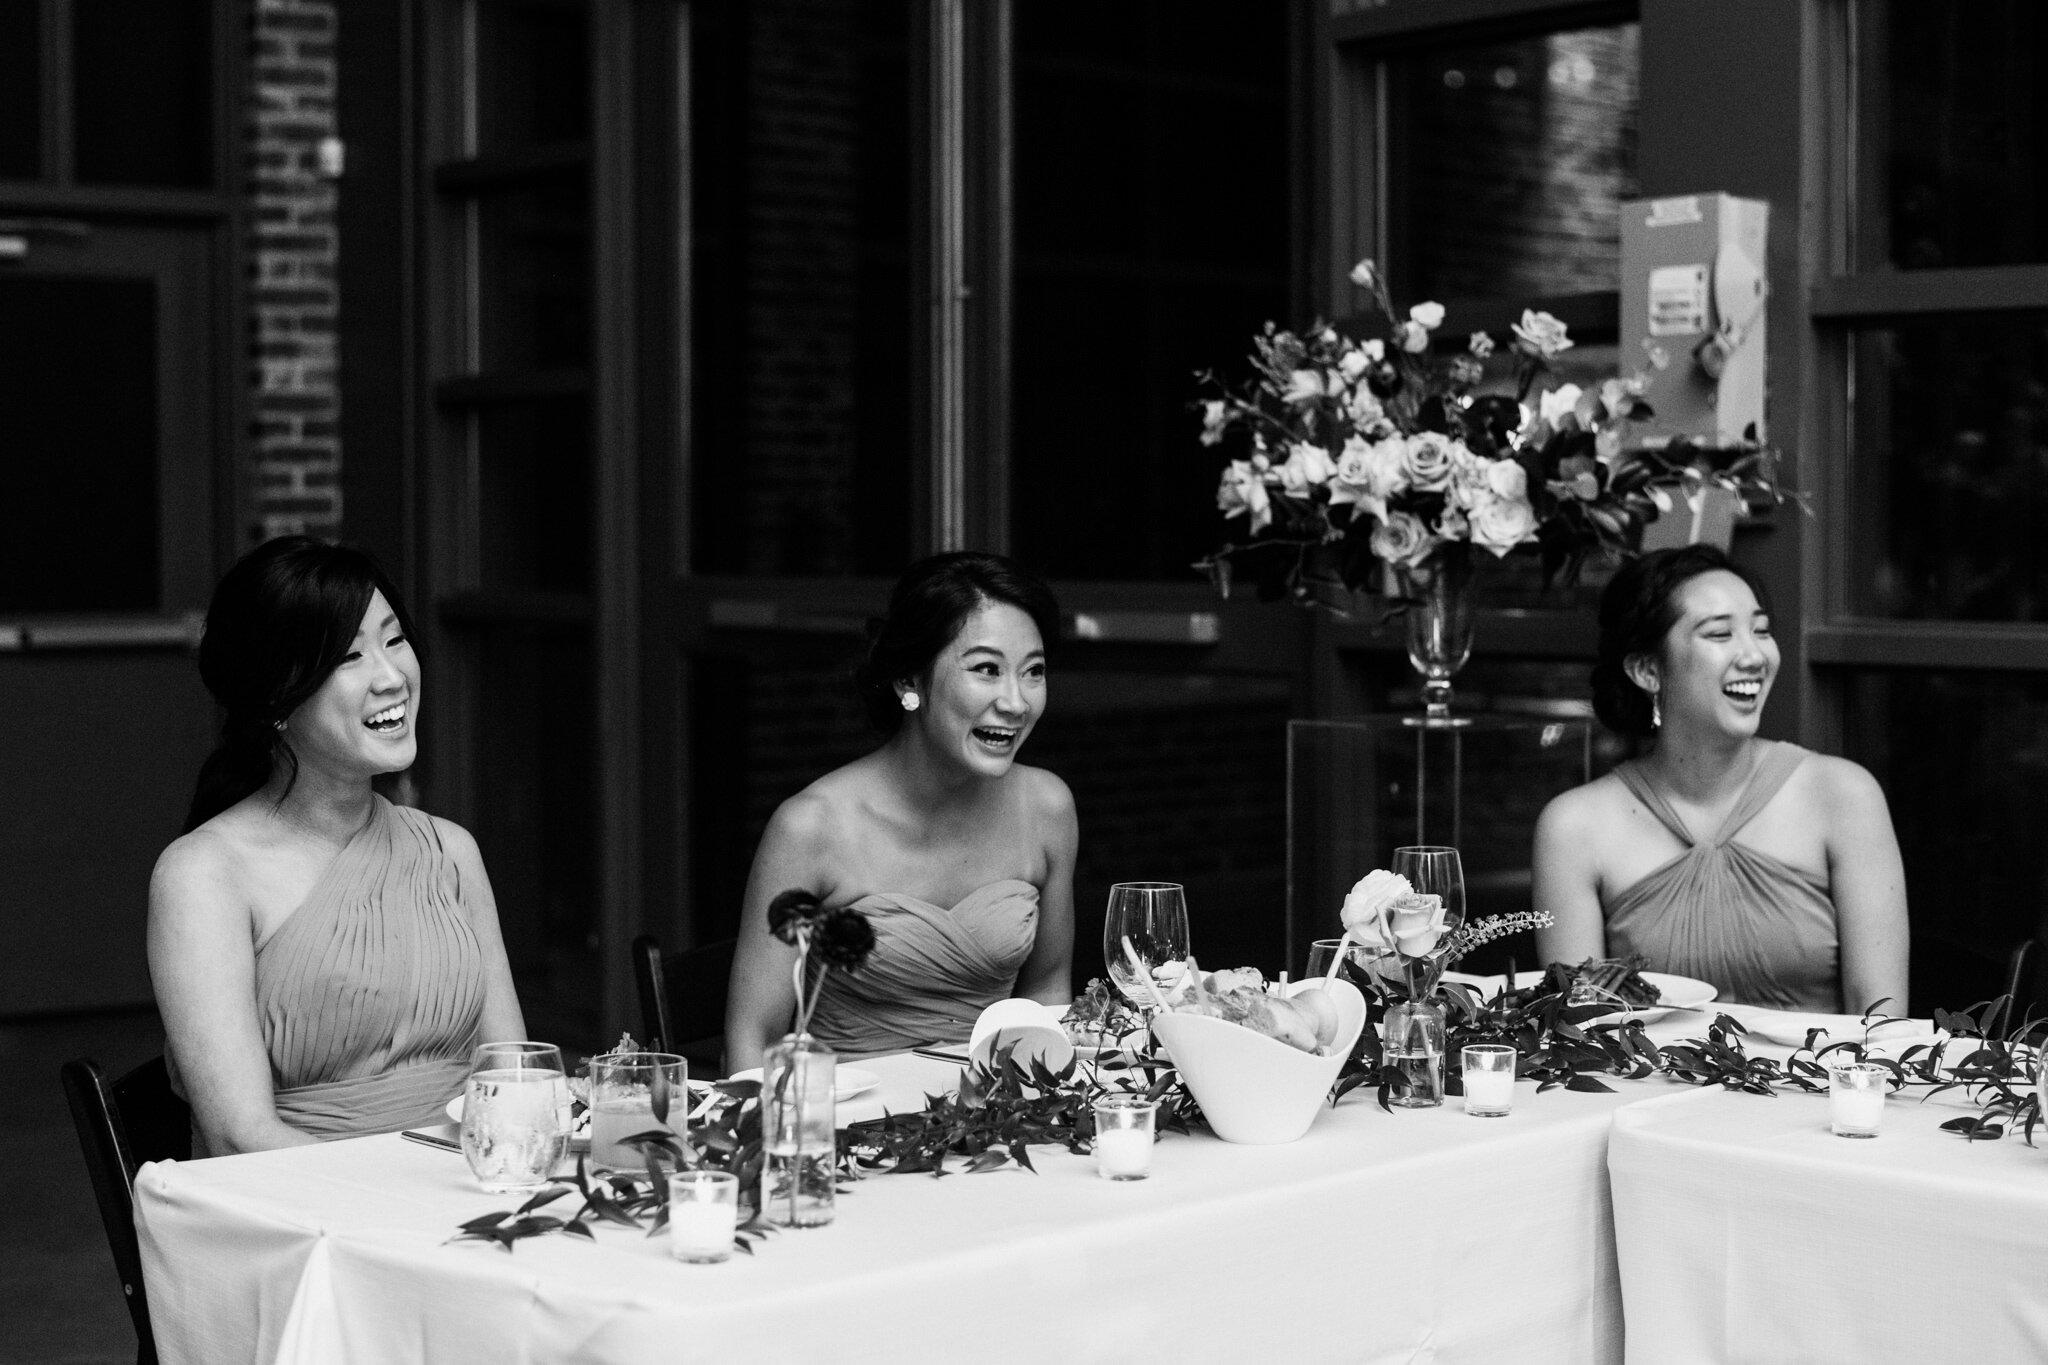 135-bridesmaids-steamwhistle-brewery-wedding-reception-ceremony-toronto-downtown-photographer.jpg